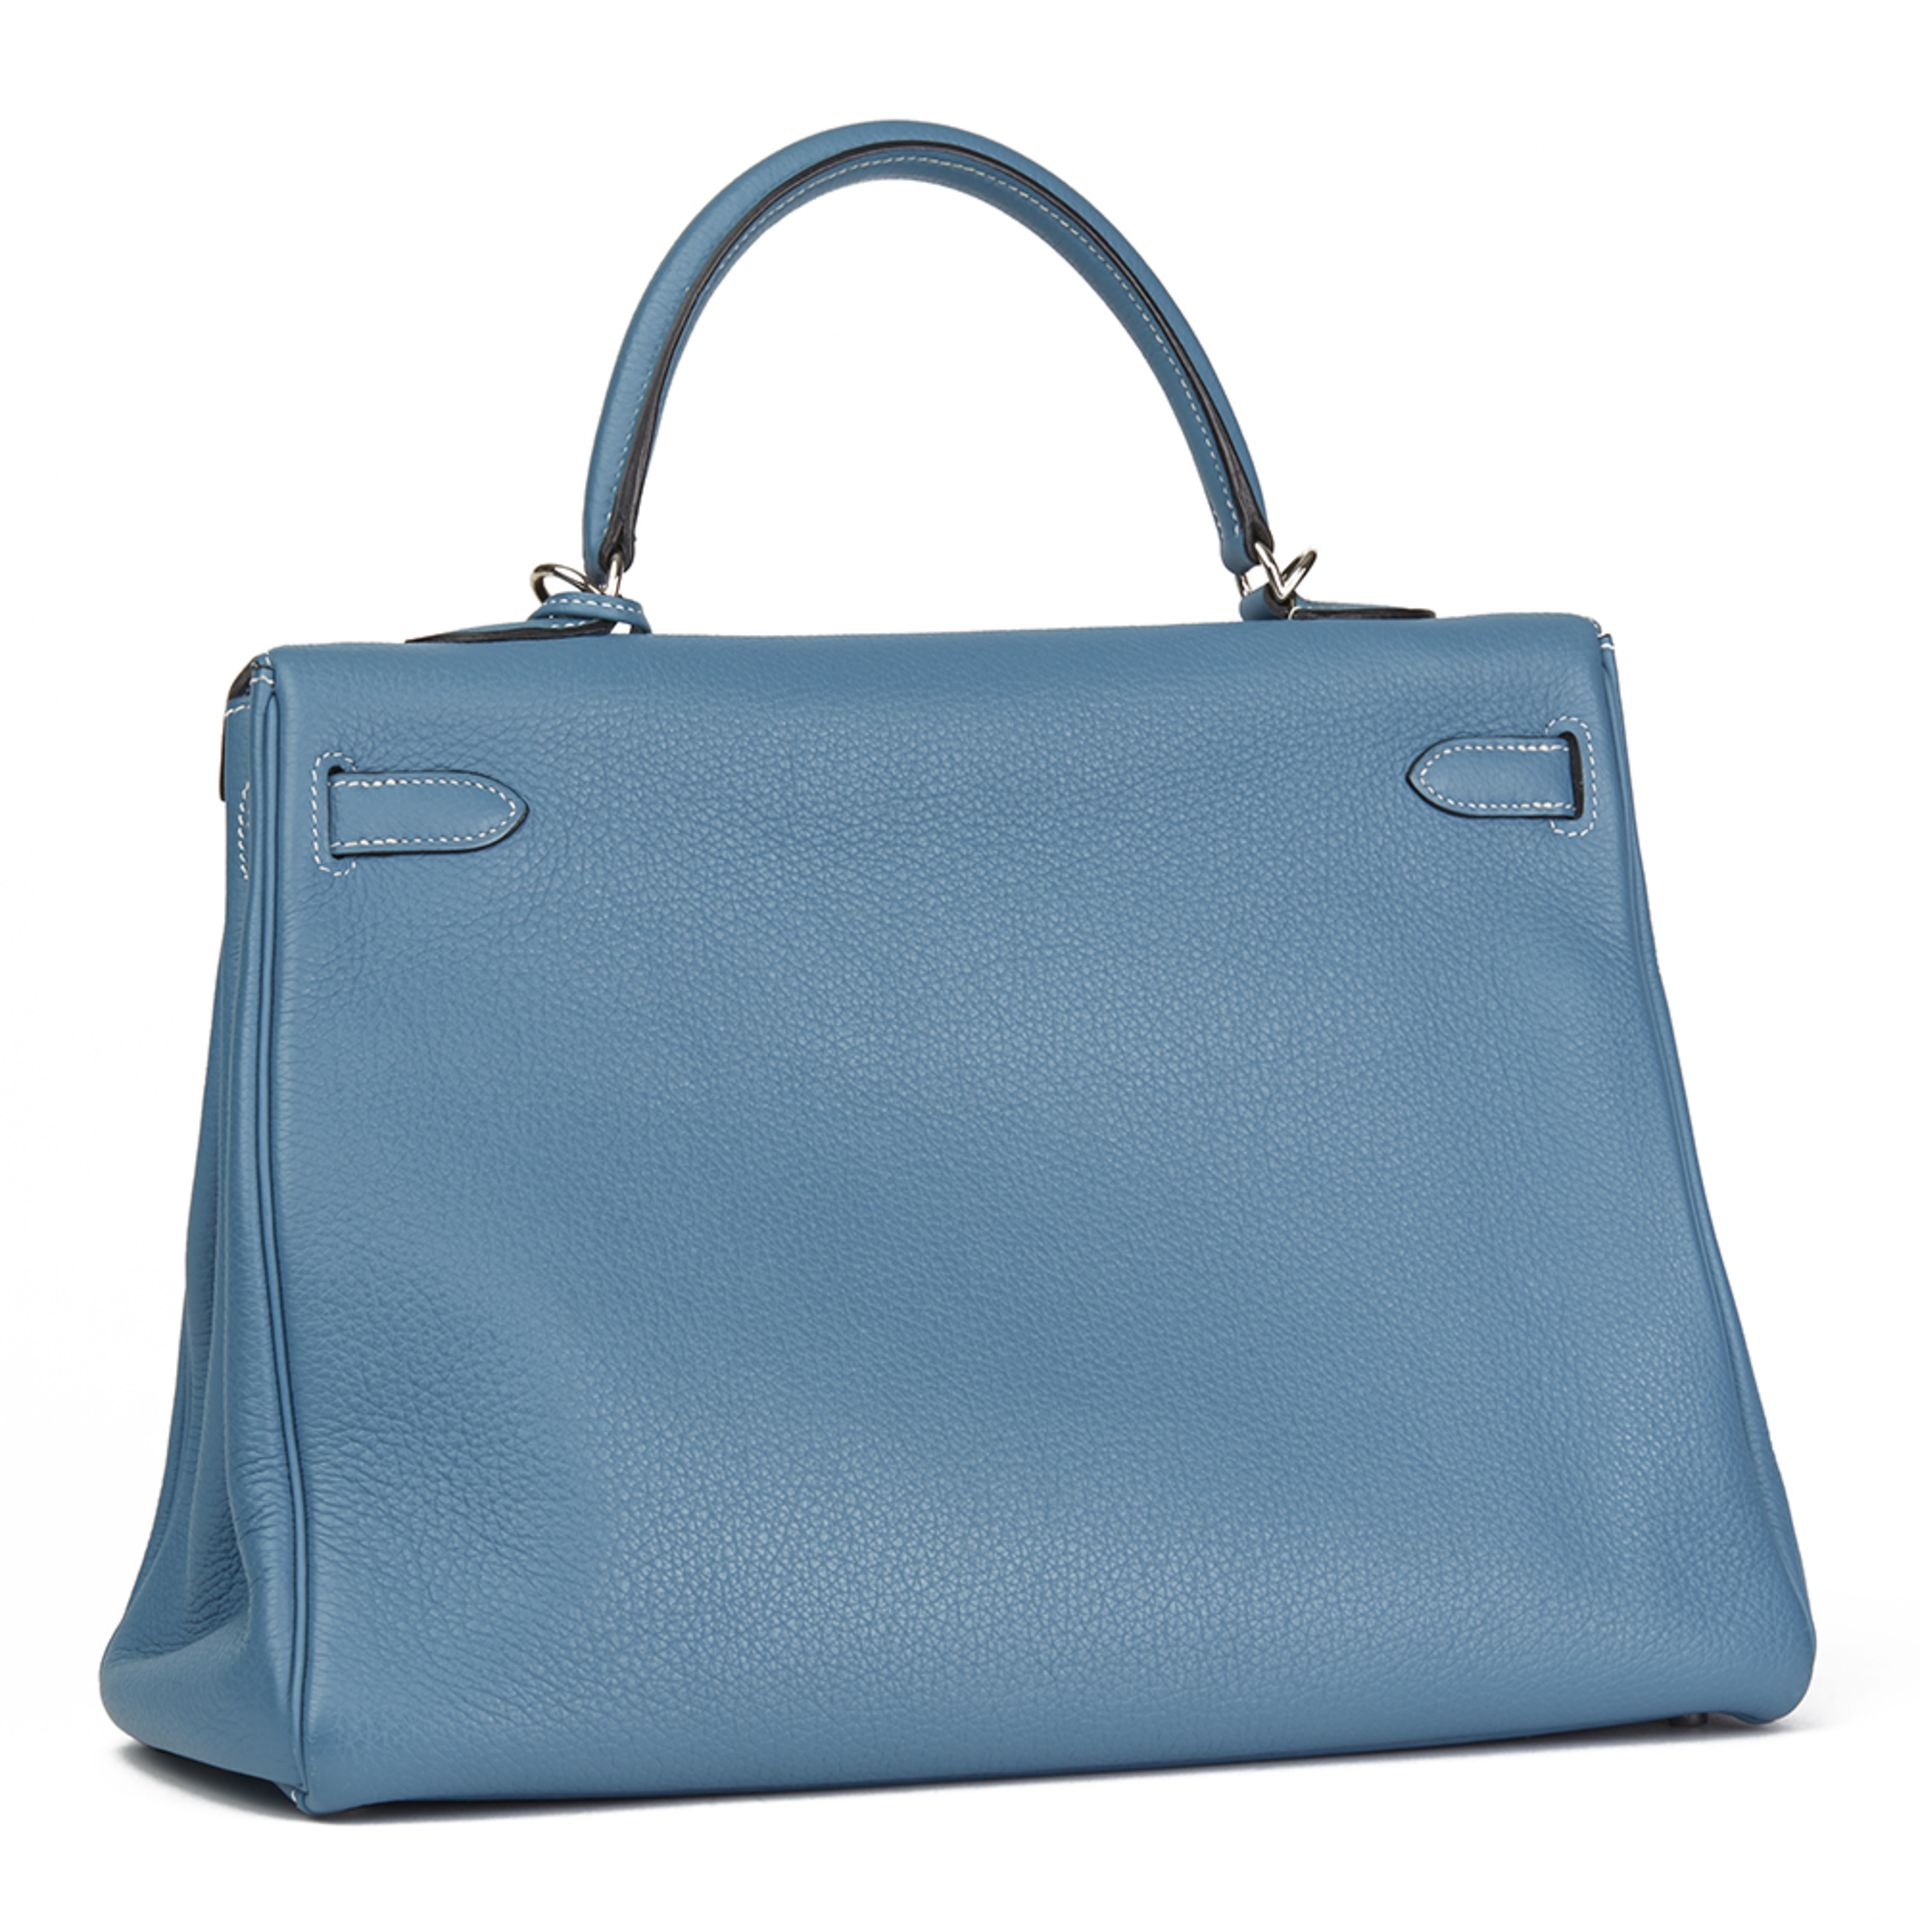 Hermès Blue Jean Togo Leather Kelly 35cm Retourne - Image 4 of 10